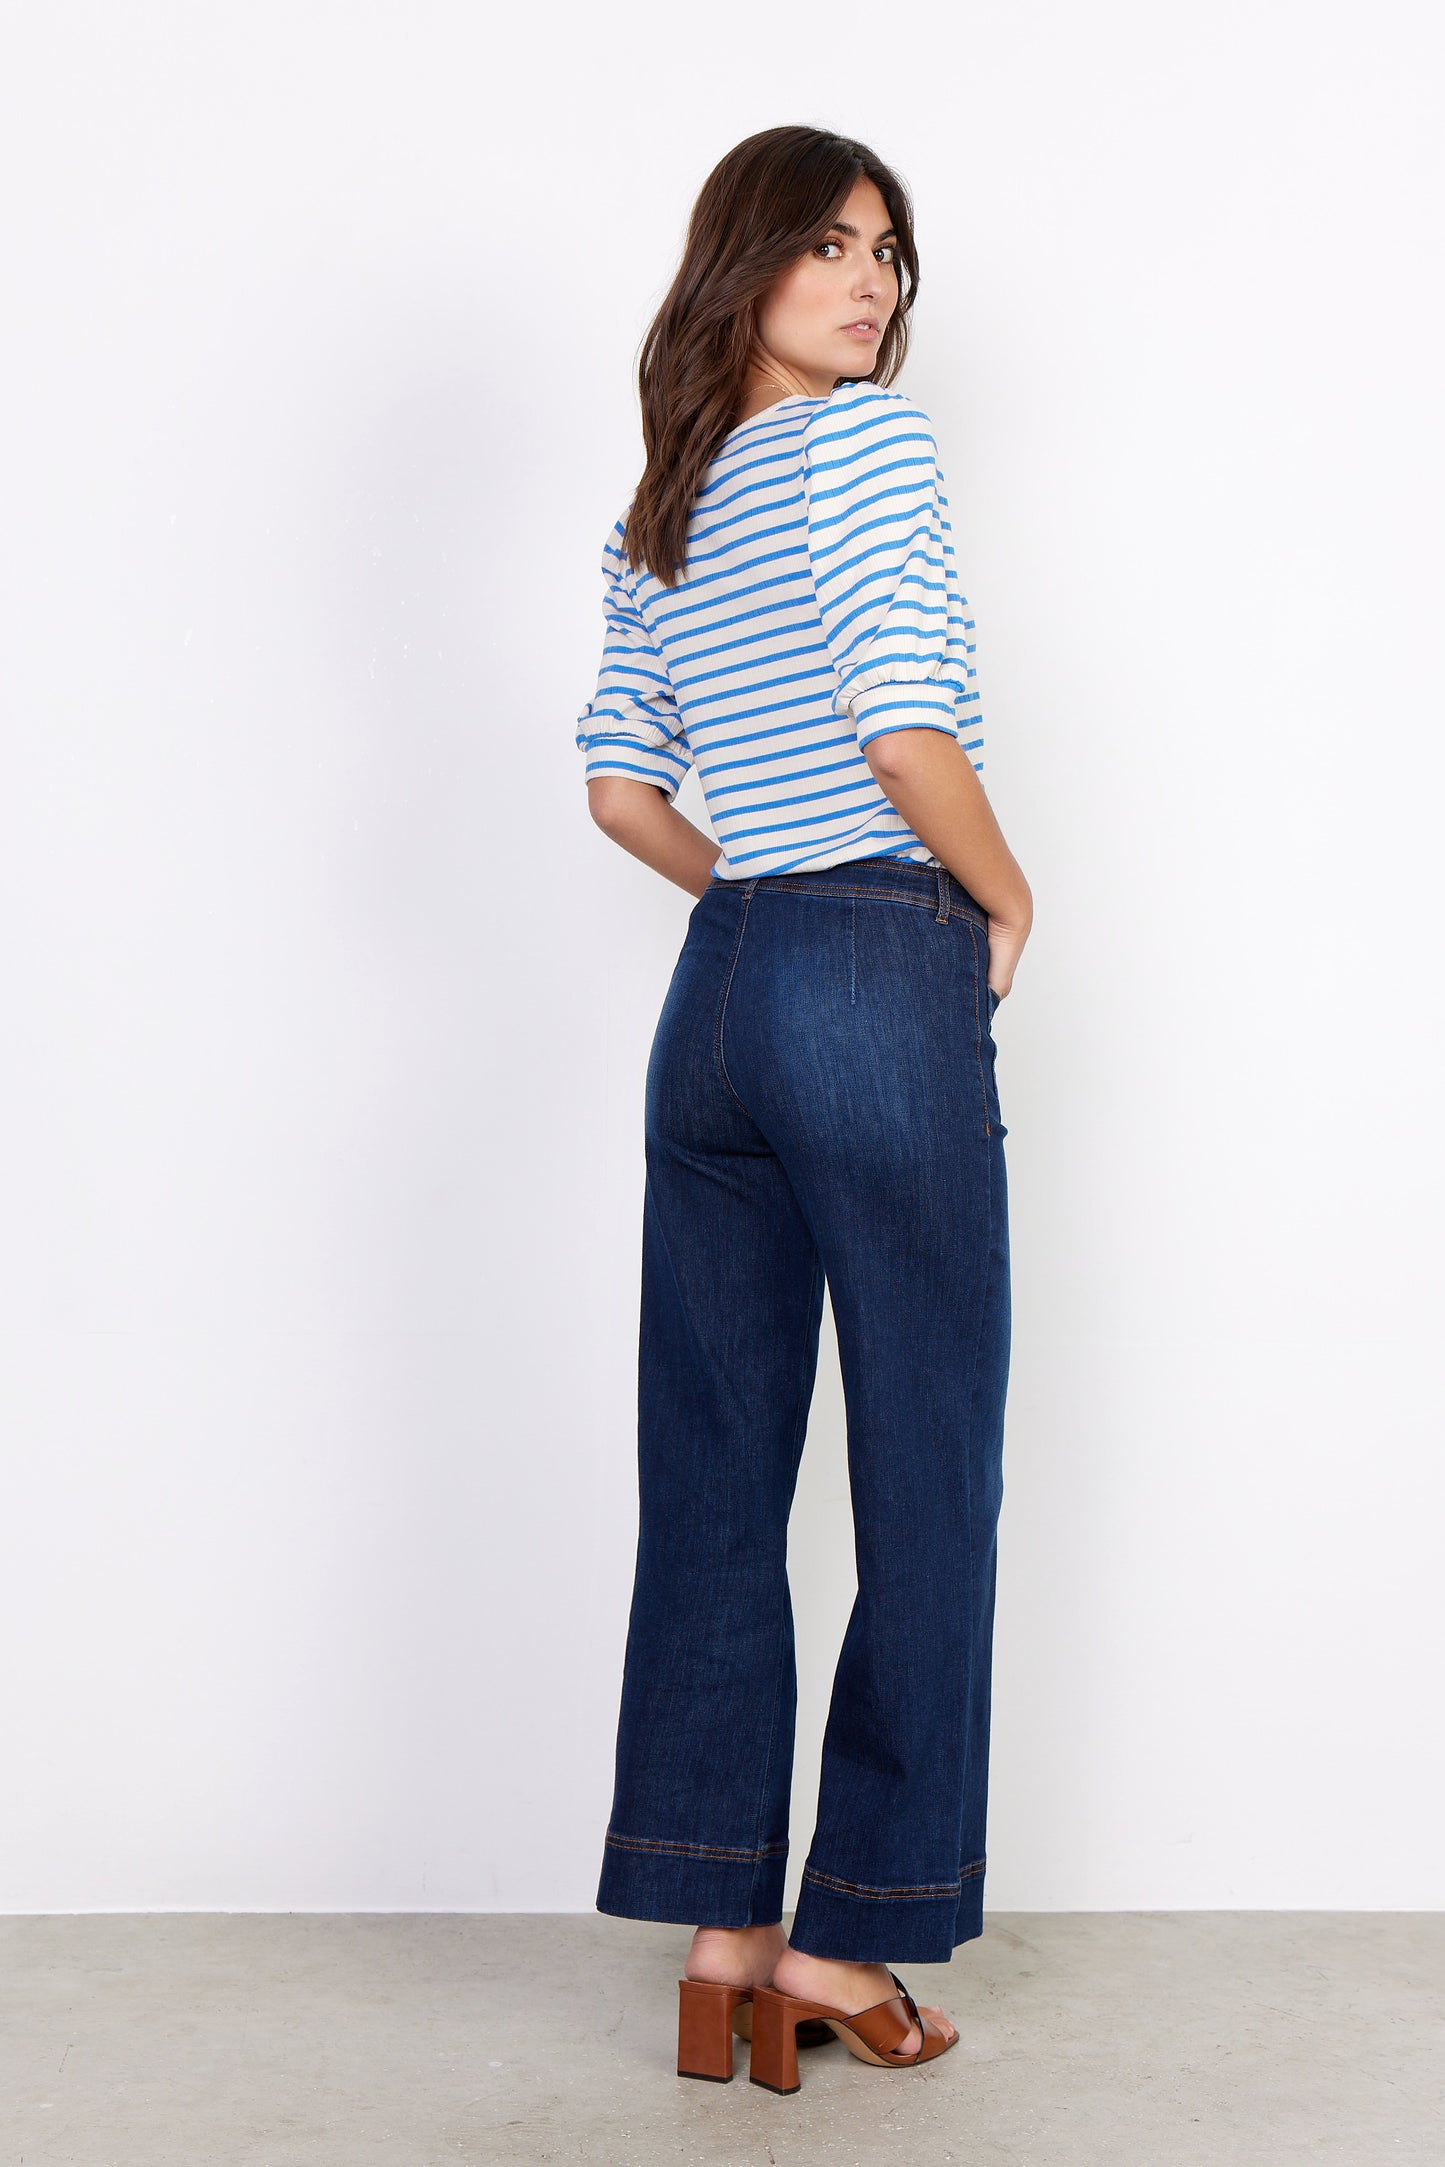 Kimberly 21-B jeans